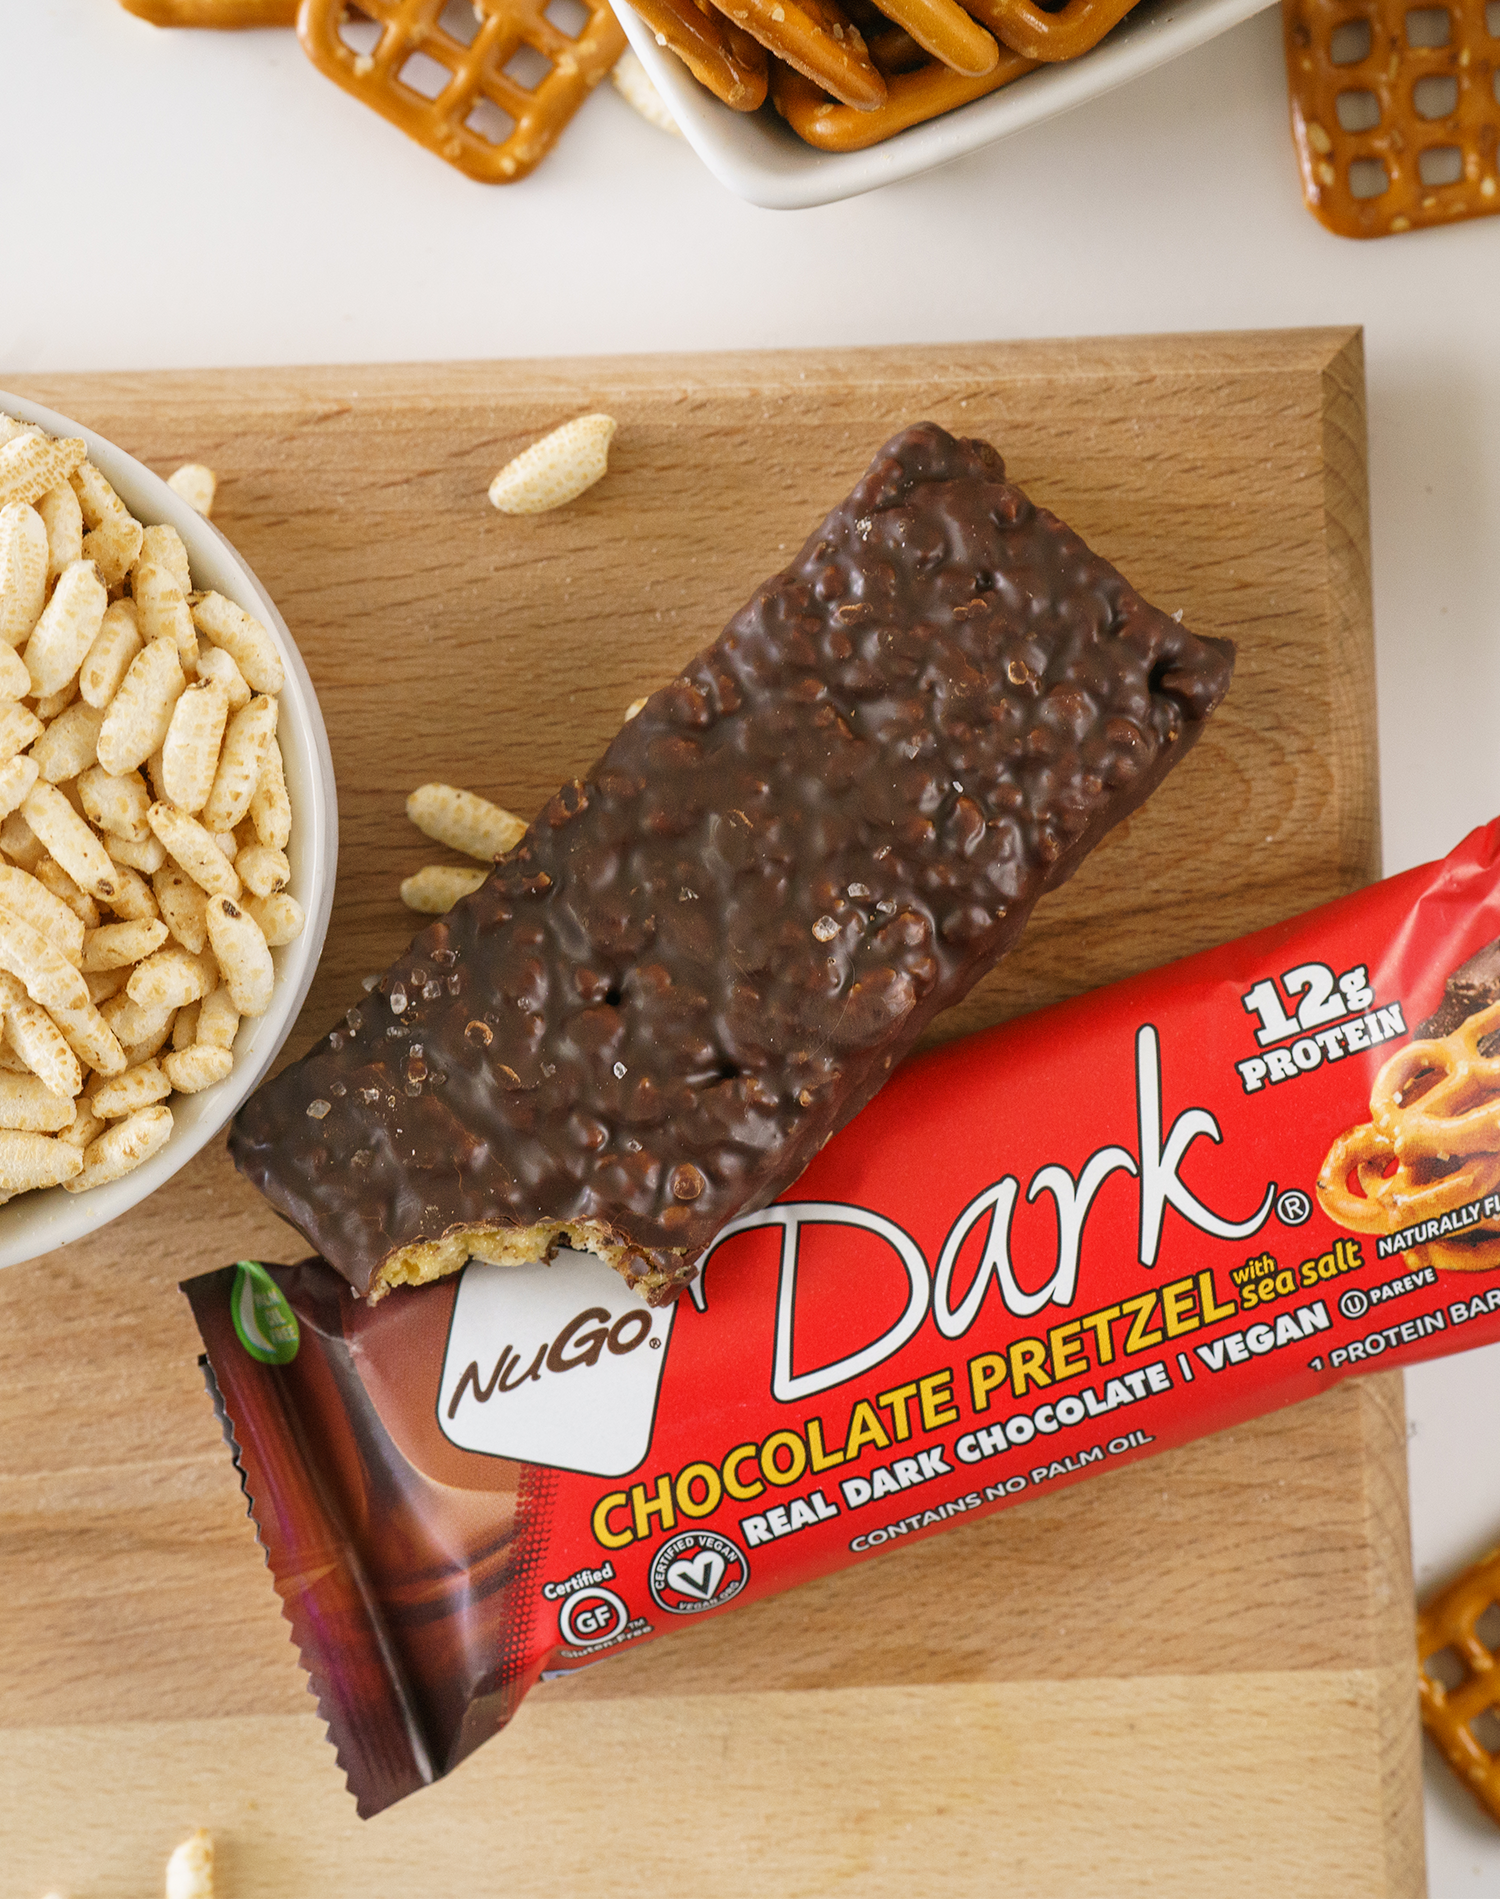 NuGo Dark Chocolate Pretzel Bar surrounded by Ingredients